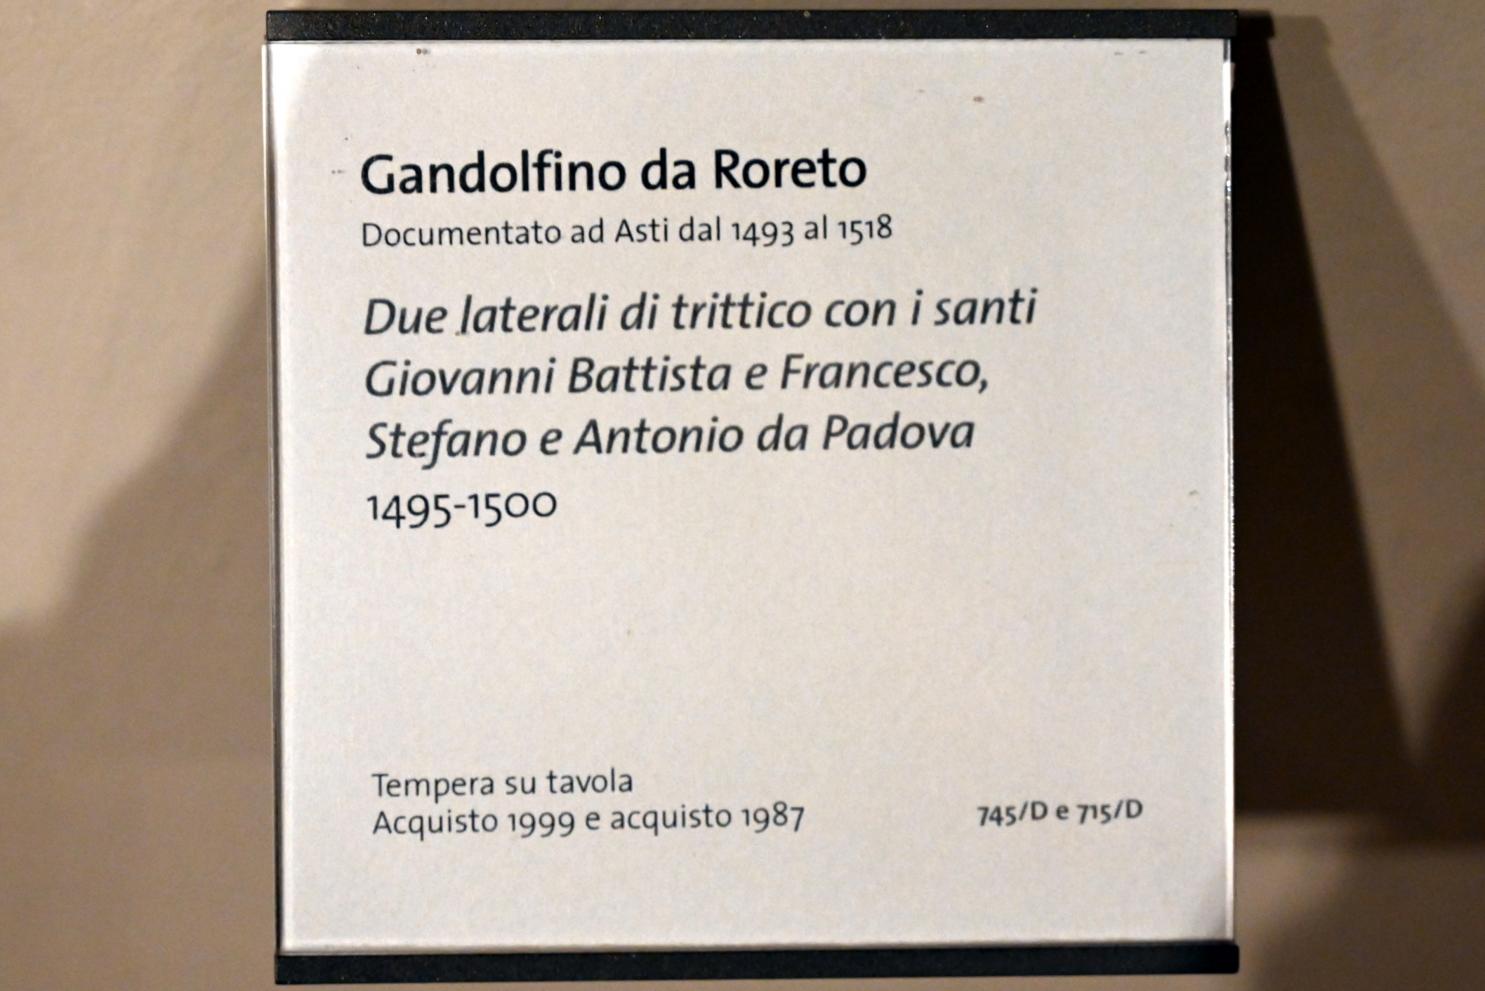 Gandolfino d'Asti (Gandolfino da Roreto) (1497–1505), Tafel eines Triptychons mit den Heiligen Stephanus und Antonius von Padua, Turin, Museo civico d'arte antica, Saal 4, 1495–1500, Bild 2/2